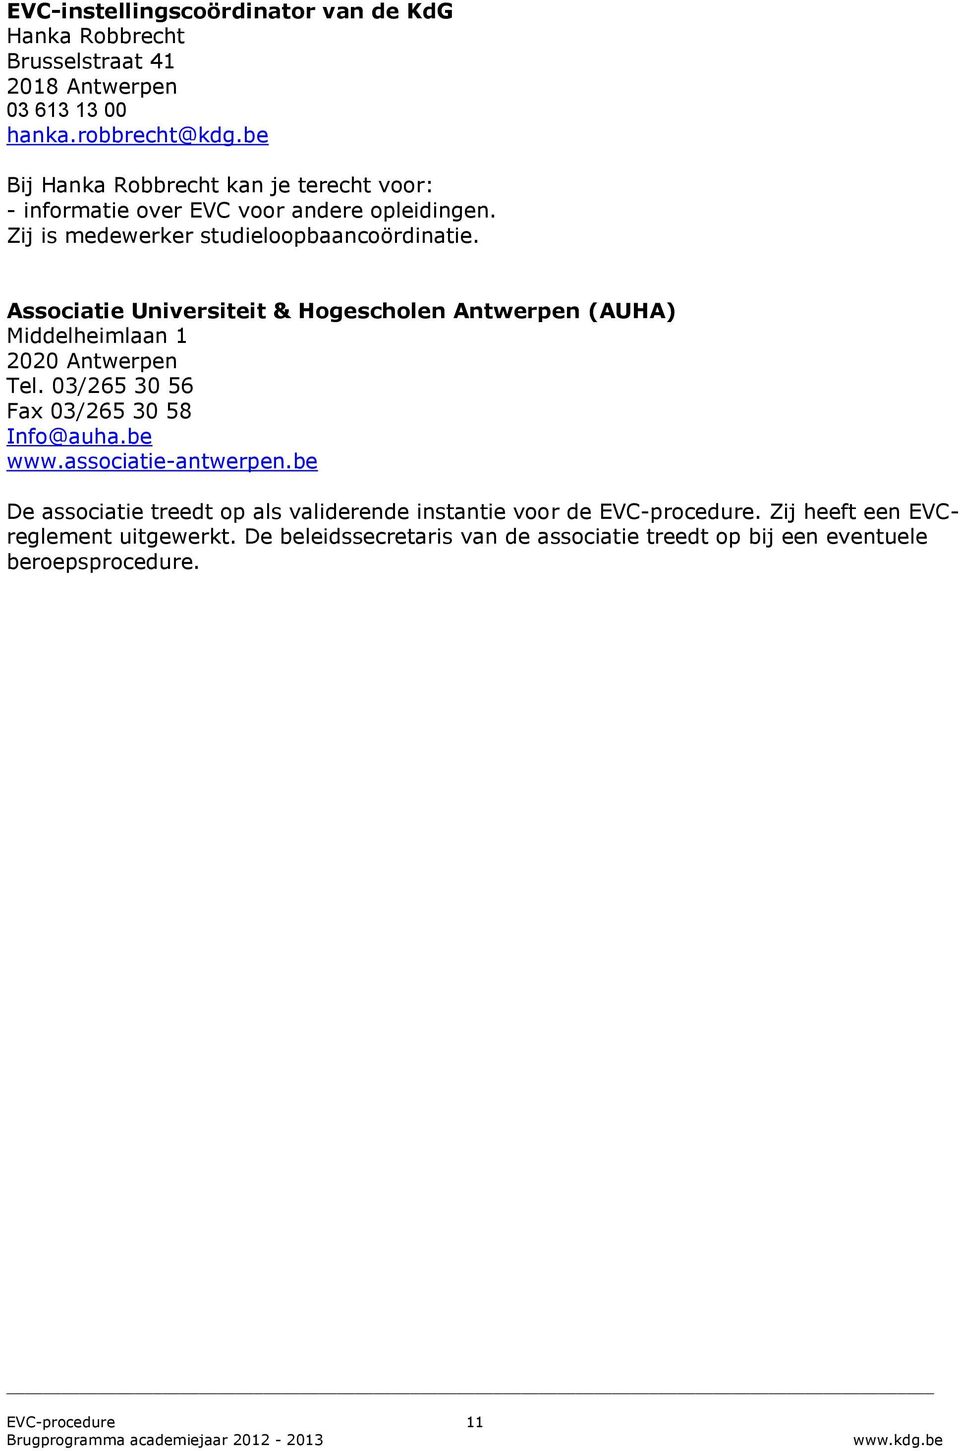 Associatie Universiteit & Hogescholen Antwerpen (AUHA) Middelheimlaan 1 2020 Antwerpen Tel. 03/265 30 56 Fax 03/265 30 58 Info@auha.be www.